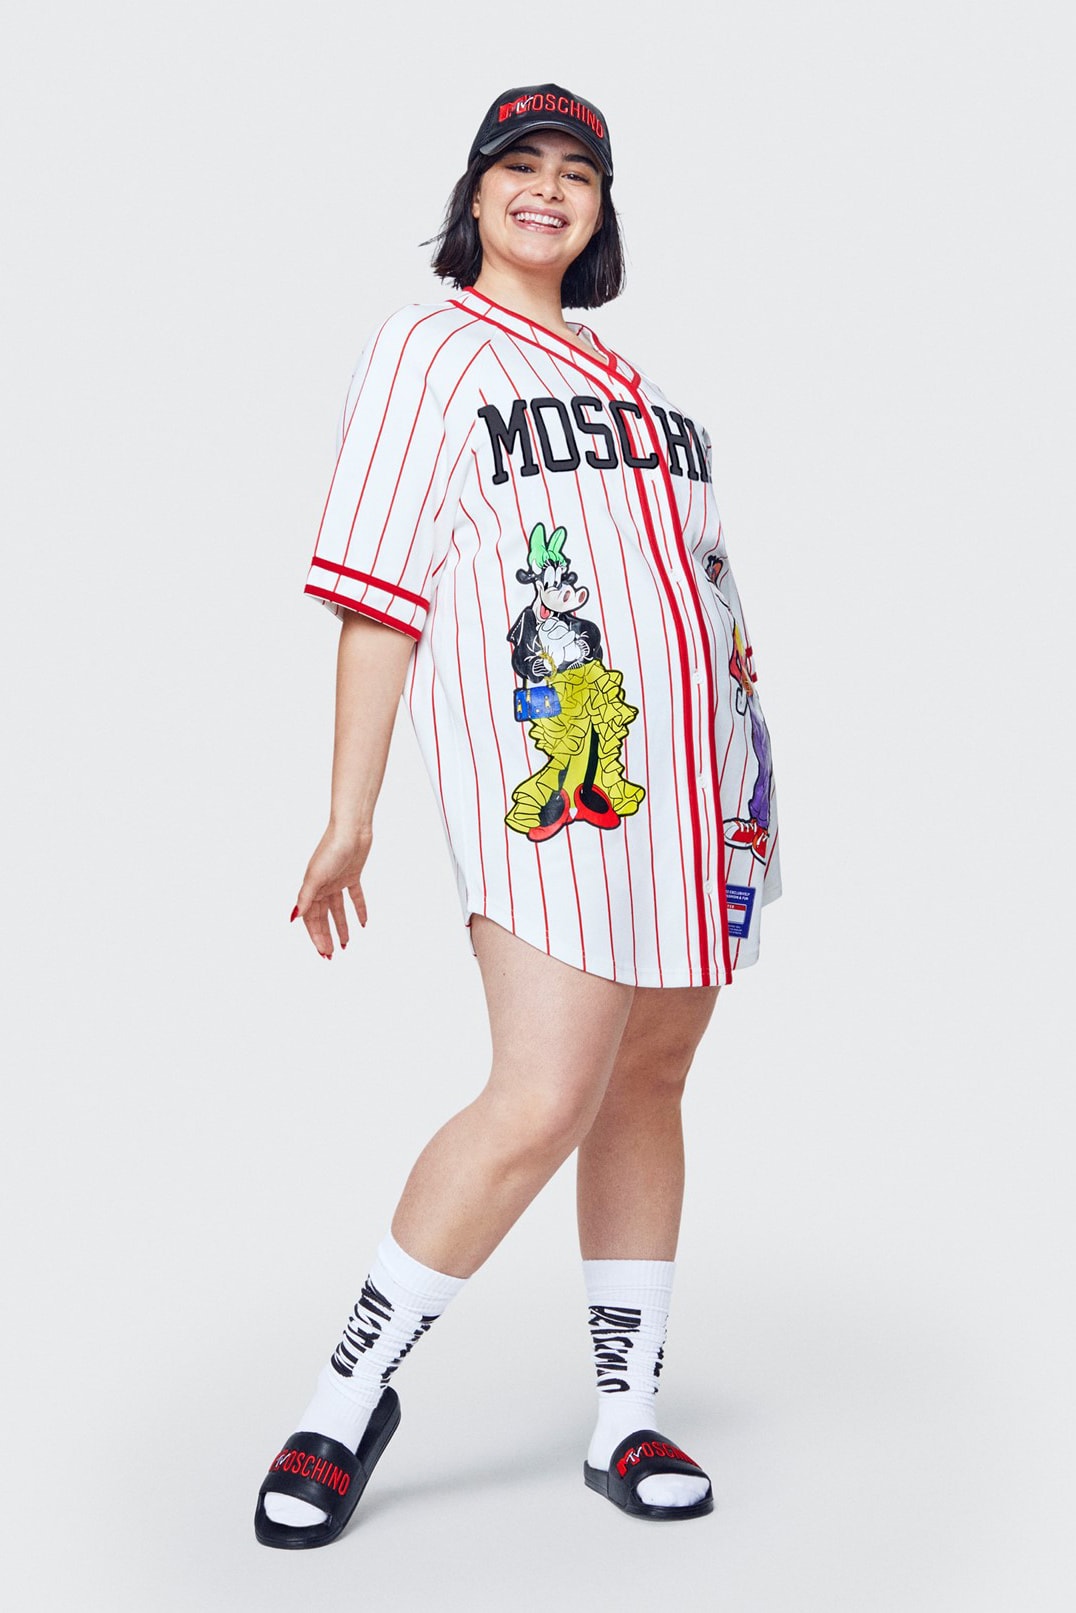 Moschino H&M Collection Lookbook Barbie Ferreira Baseball Jersey White